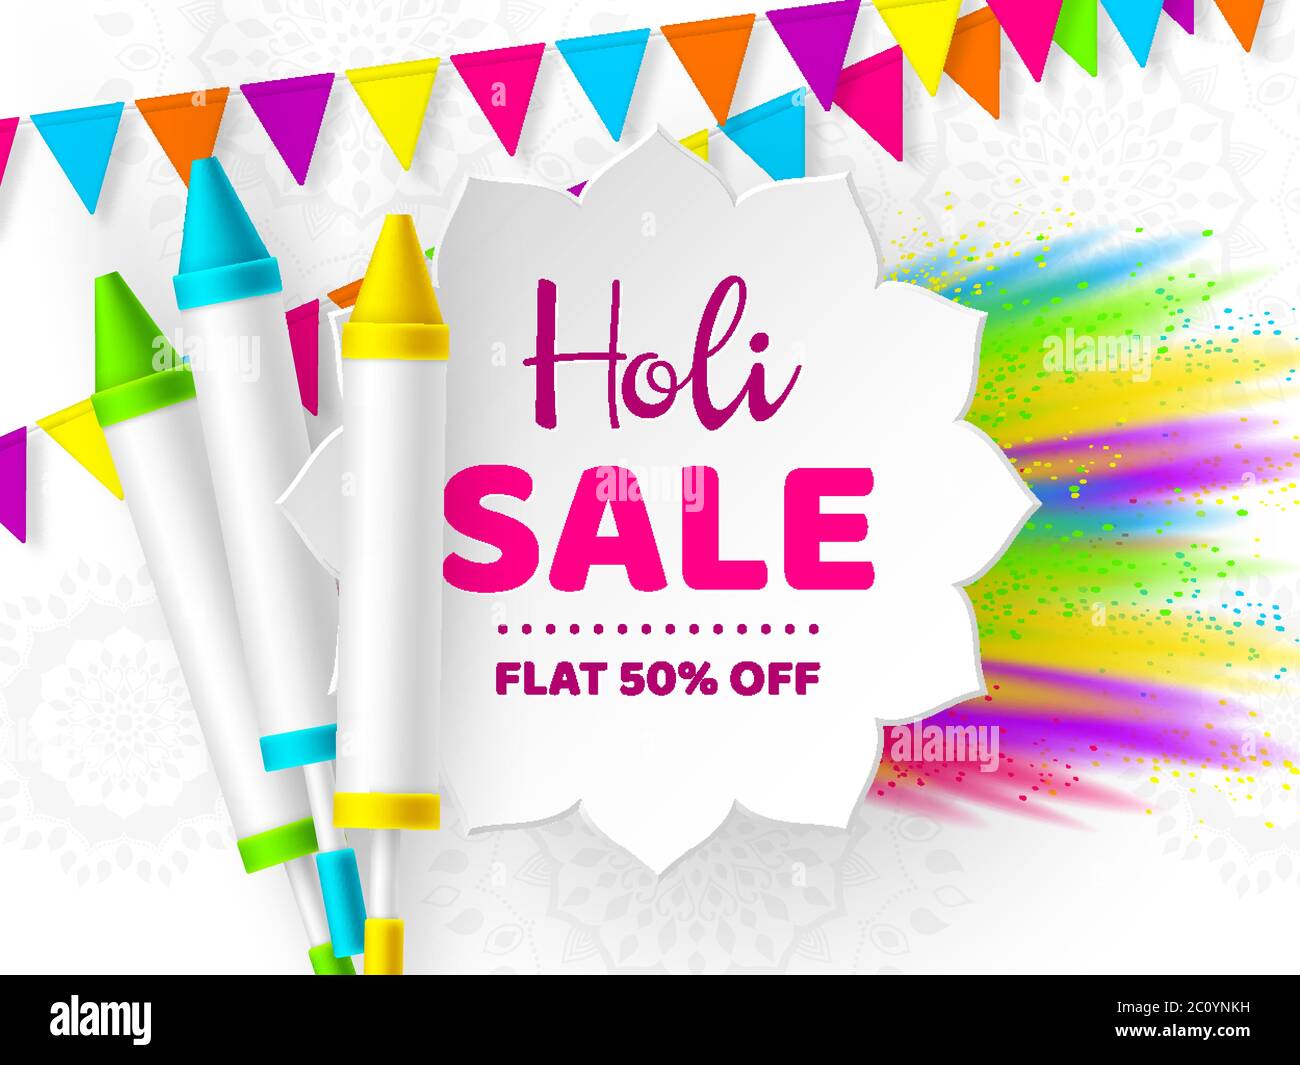 Holi sale promotional background. Stock Vector